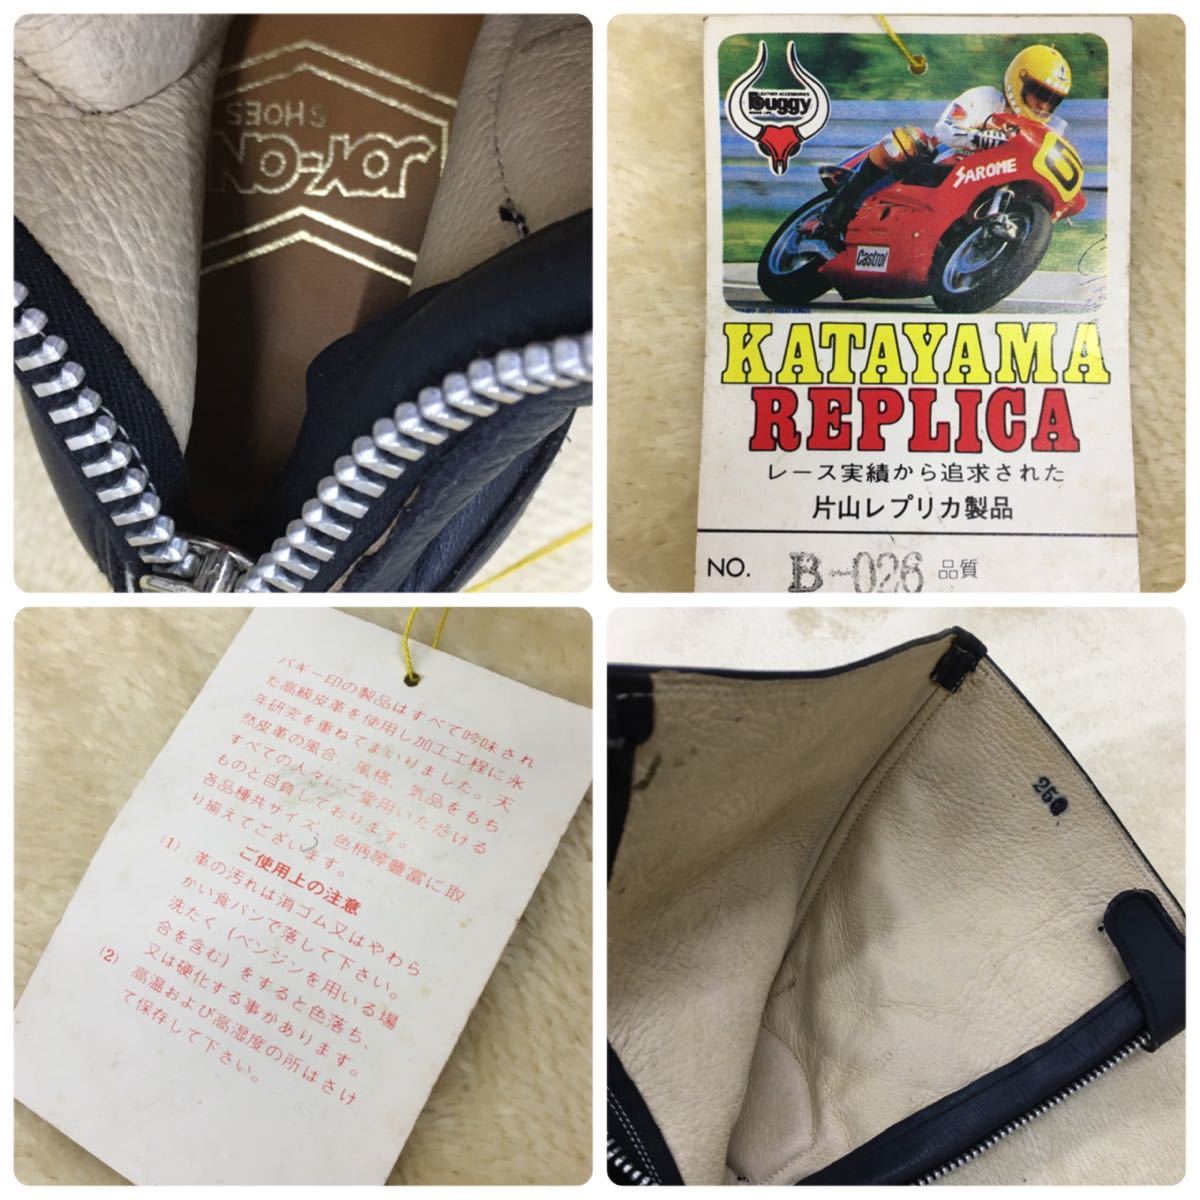 KATAYAMA REPLICA'83 片山レプリカ製品 カタヤマ バギーブランド ライディング レトロ レザーブーツ バイク 高級革靴 サイズ25cm 未使用品_画像9